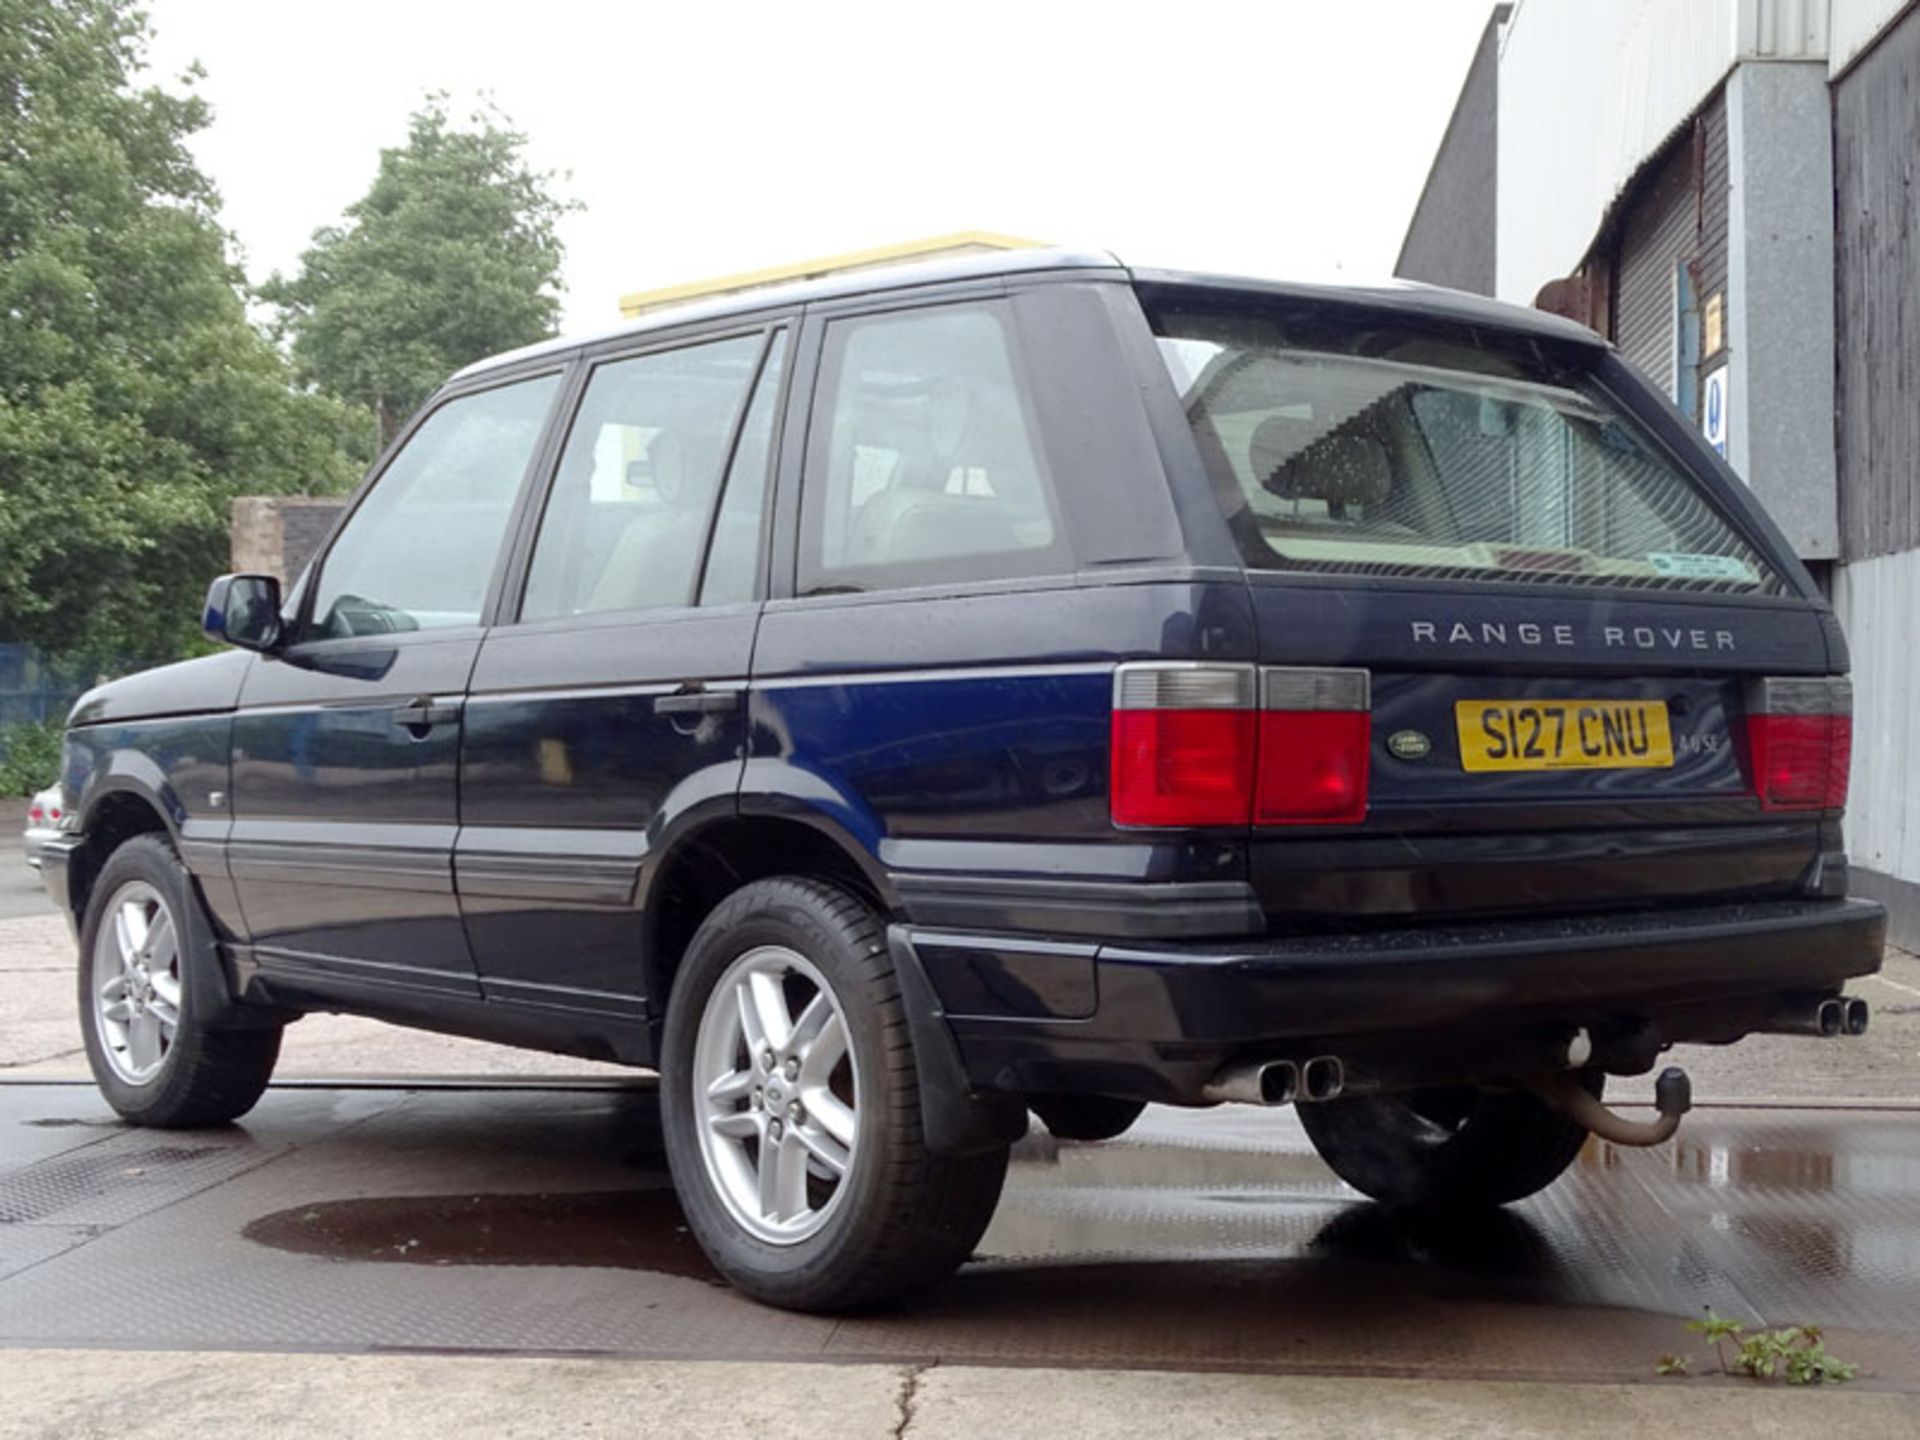 1998 Range Rover 4.0 SE - Image 2 of 4